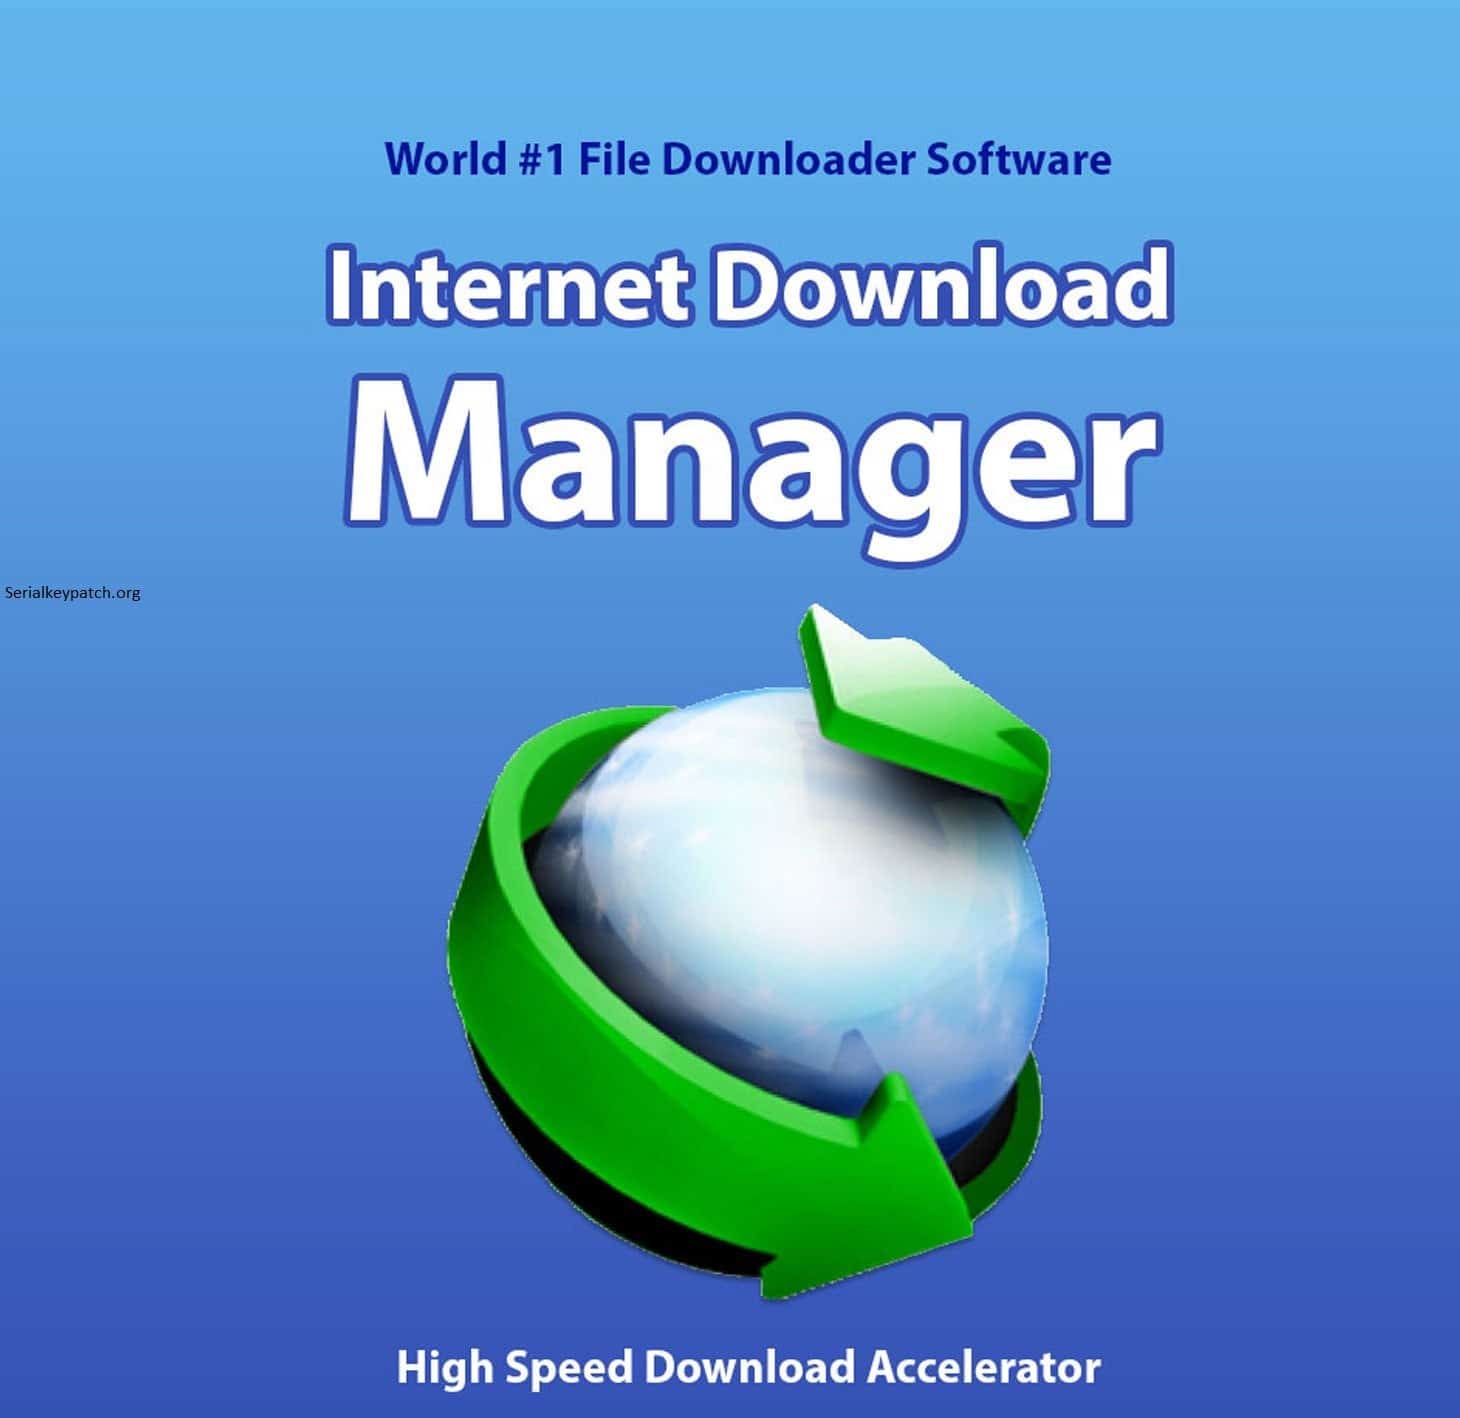 IDM Serial Key 2020 Internet Download Manager License Key